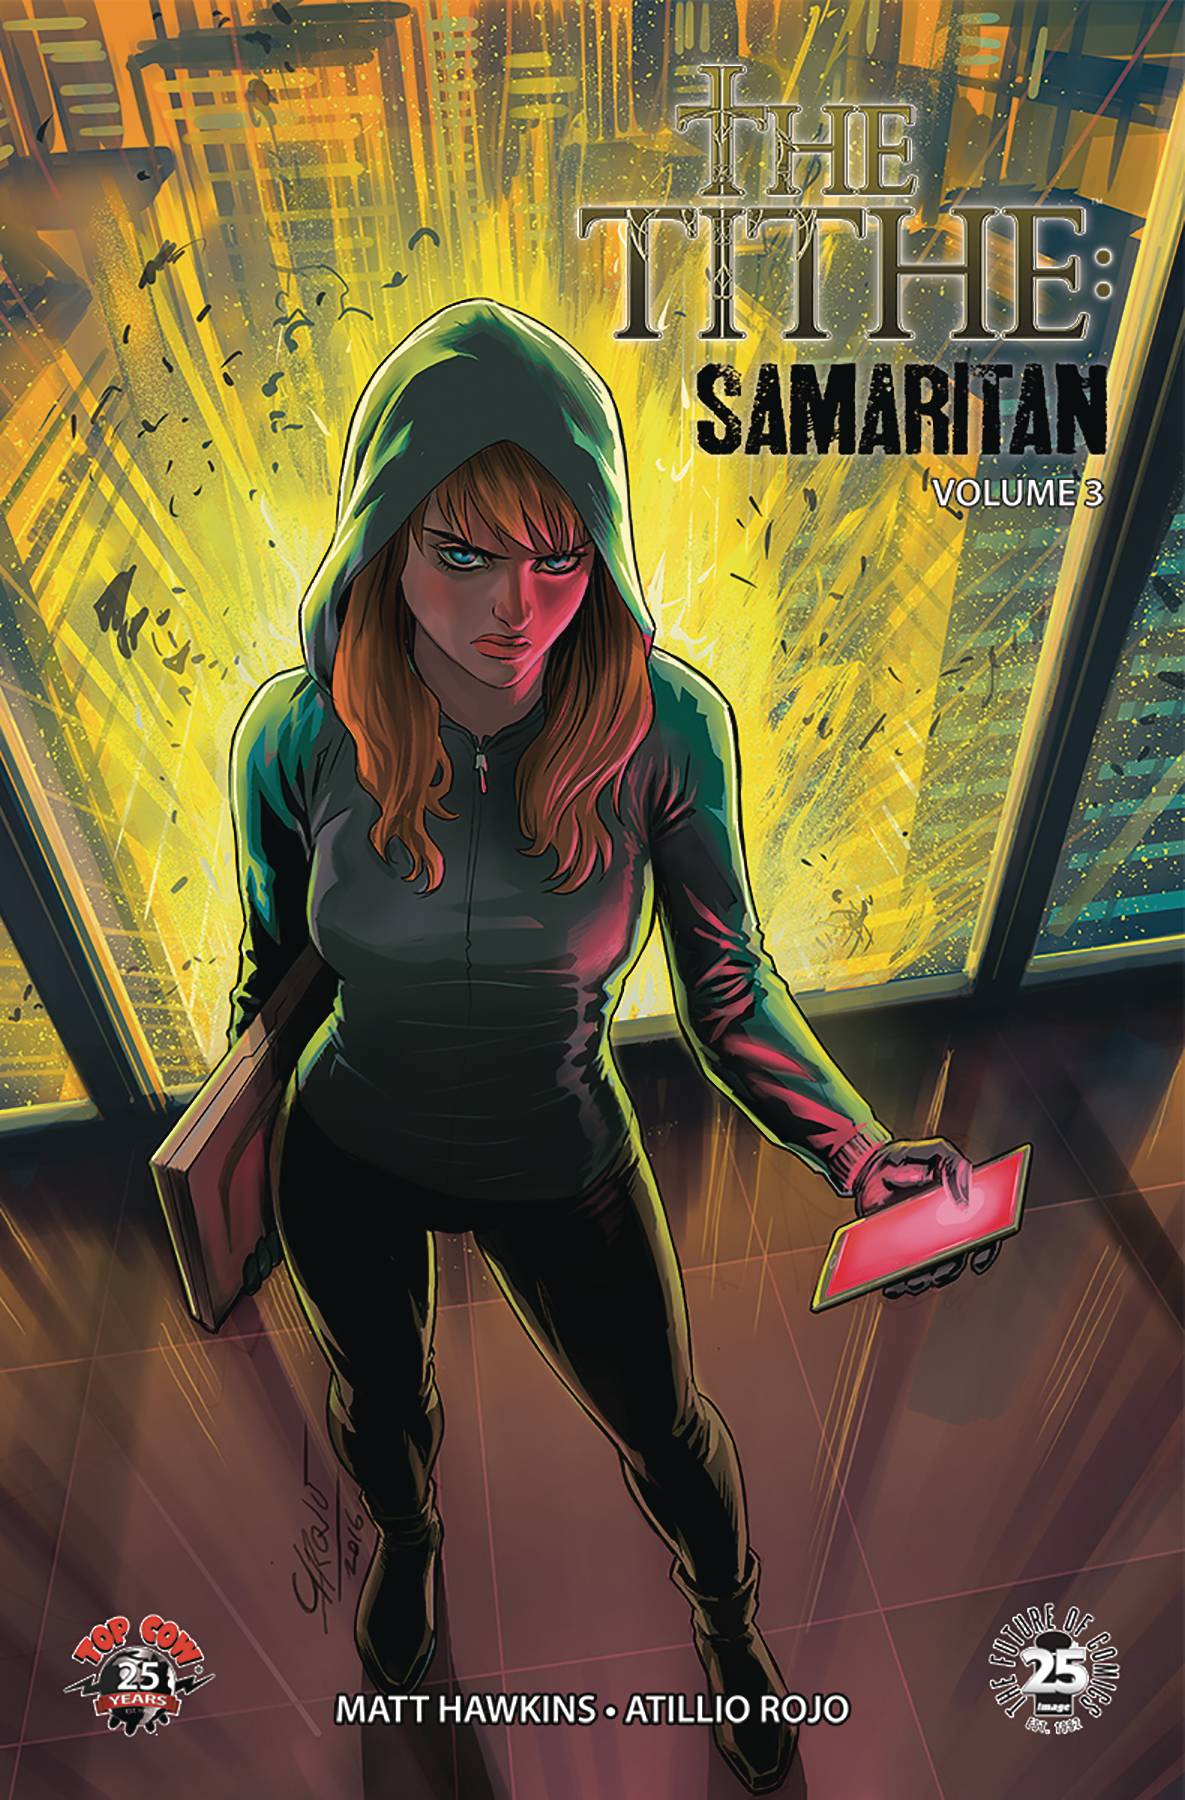 Tithe Graphic Novel Volume 3 Samaritan